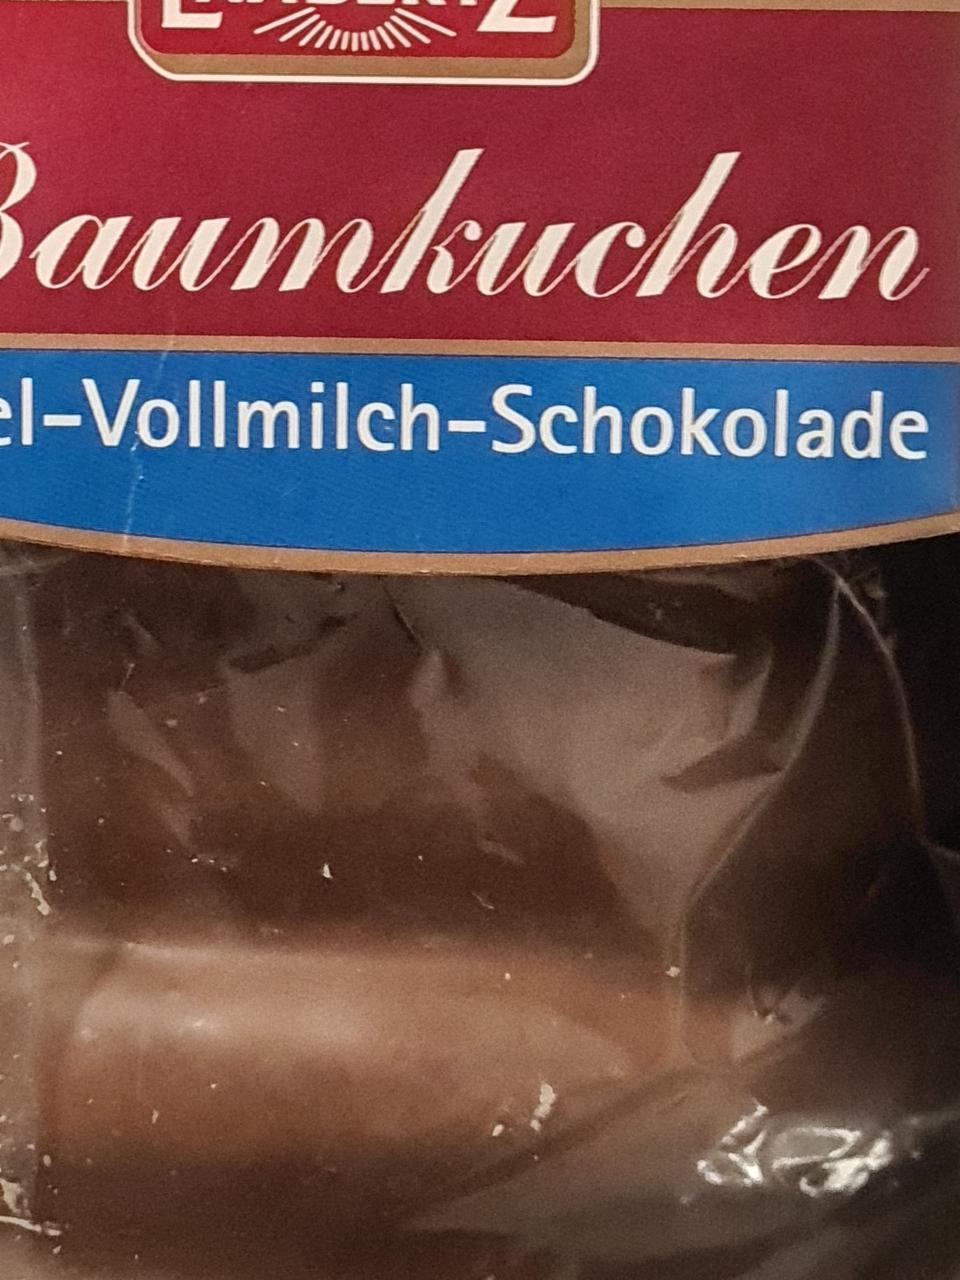 Fotografie - Baumkuchen mléčná čokoláda